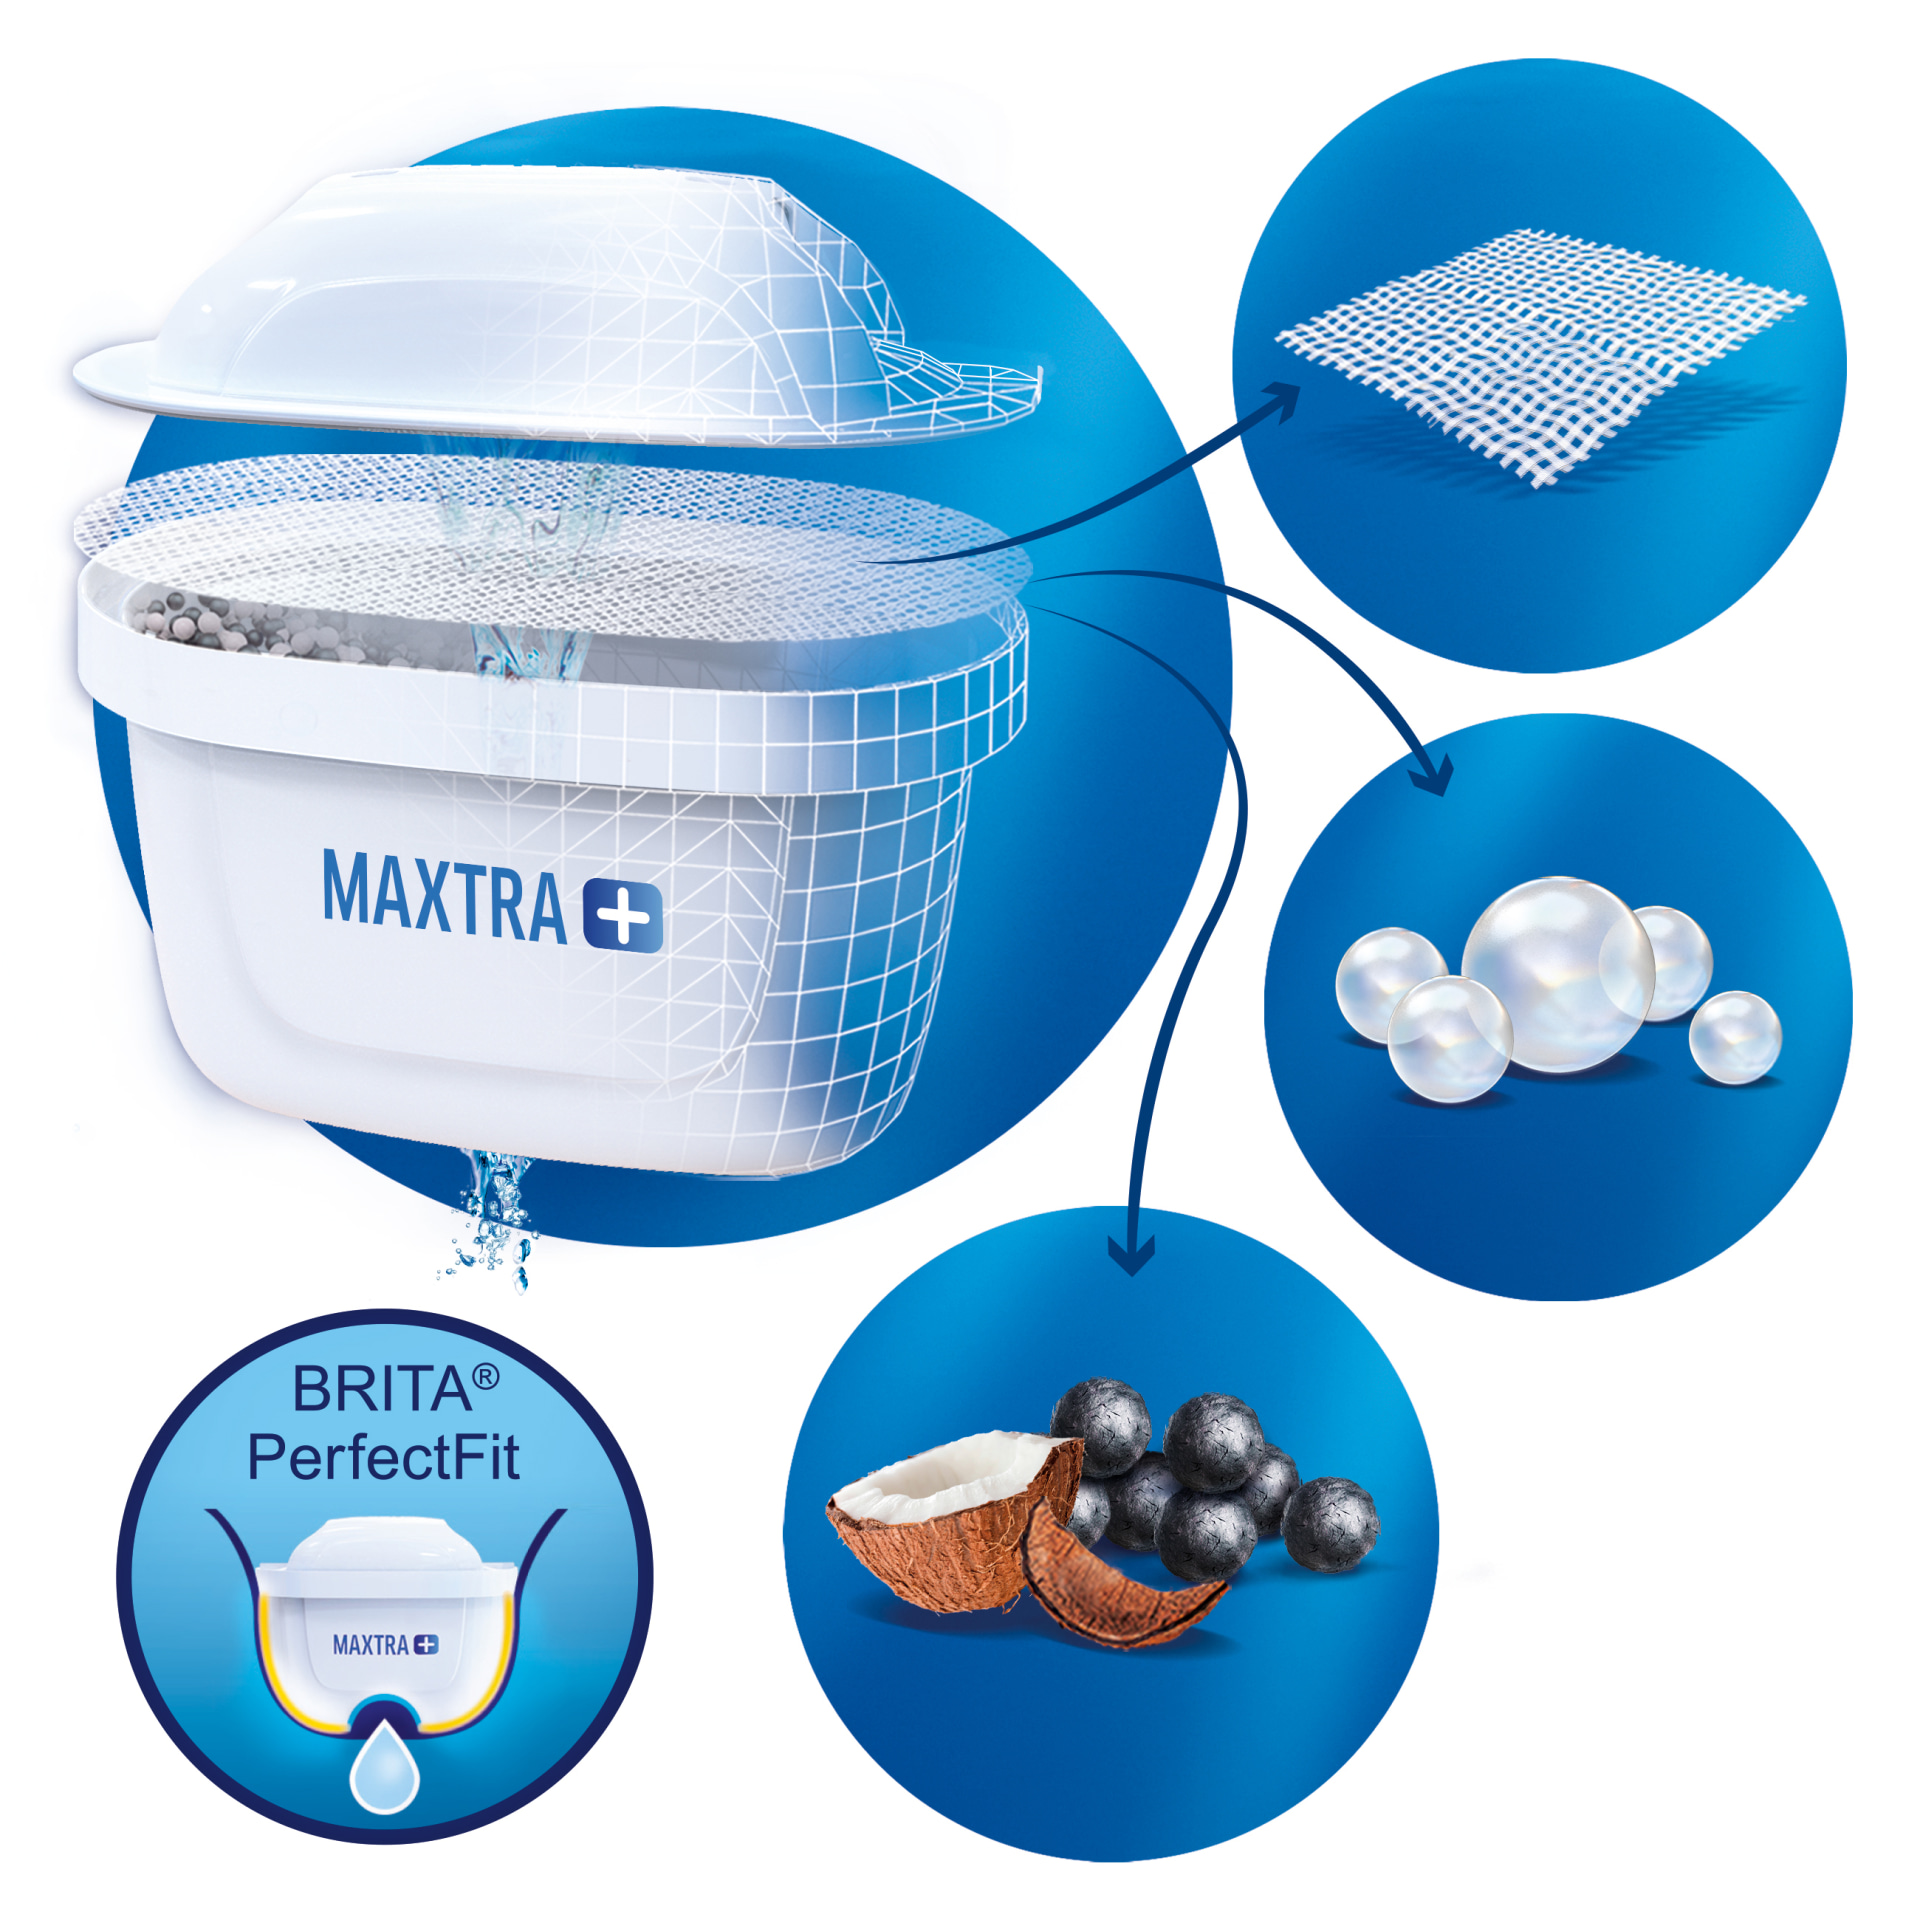 Brita MAXTRA + Water Filter Cartridges 3 Pack - ASDA Groceries